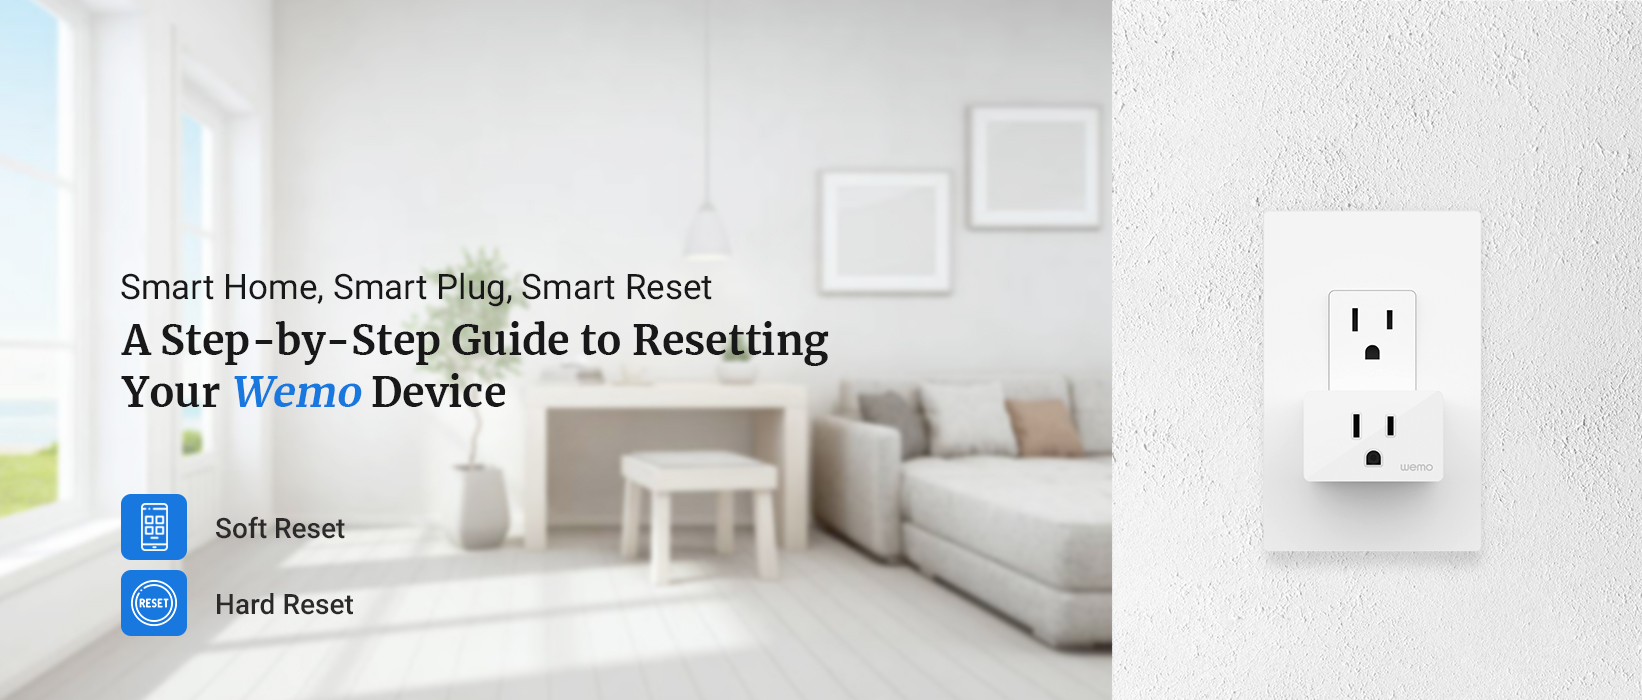 How to Reset Wemo Smart Plug